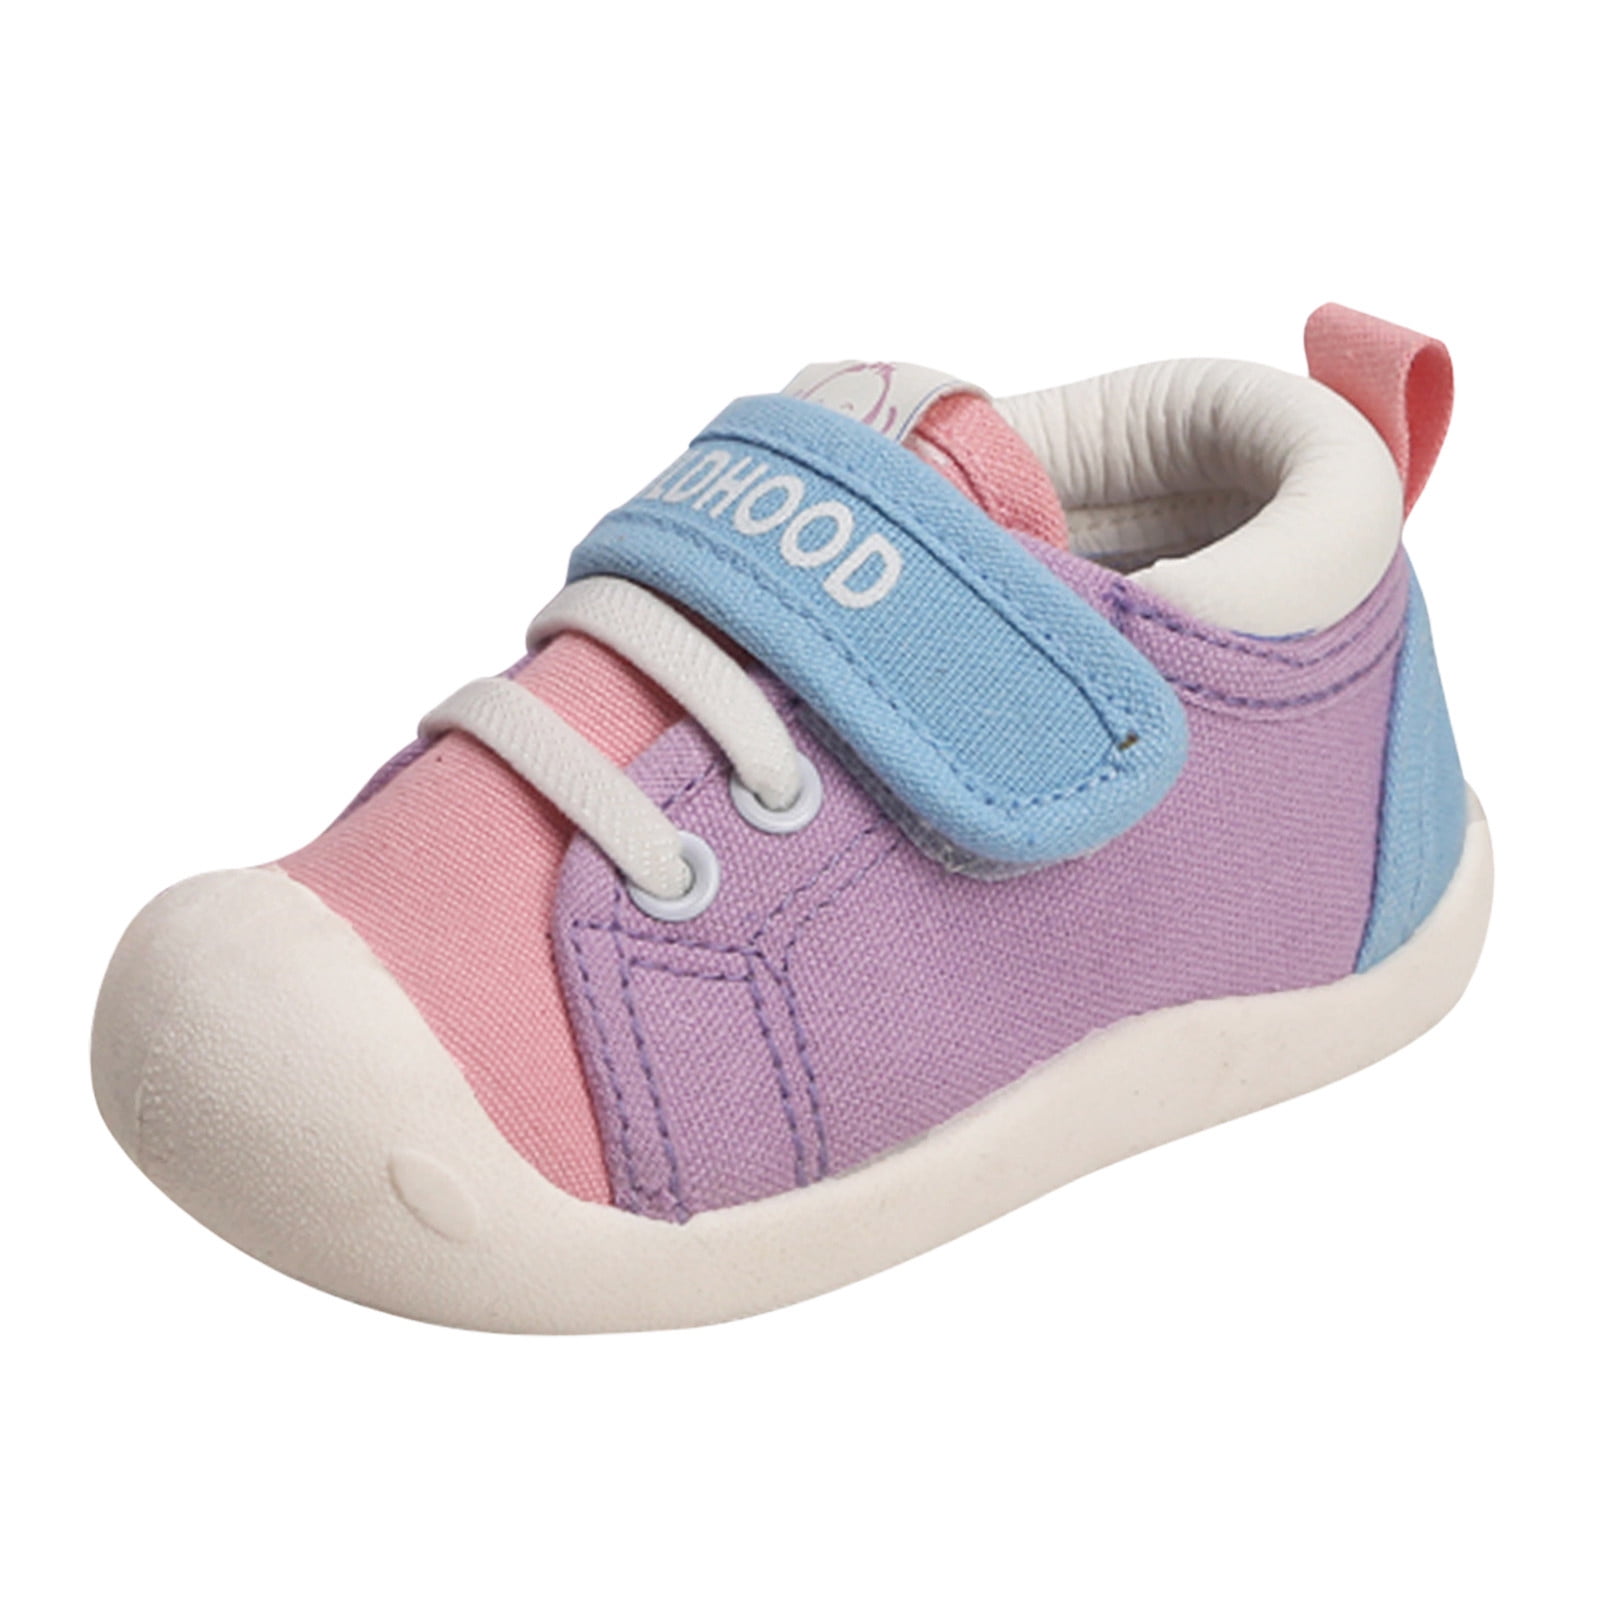 klæde sig ud Retfærdighed drag Baby Shoes Size 17 For 15 Months-18 Months Todder Boy Non Slip Mesh First  Walkers 6 9 12 18 24 Months Kids Sneakers Purple - Walmart.com